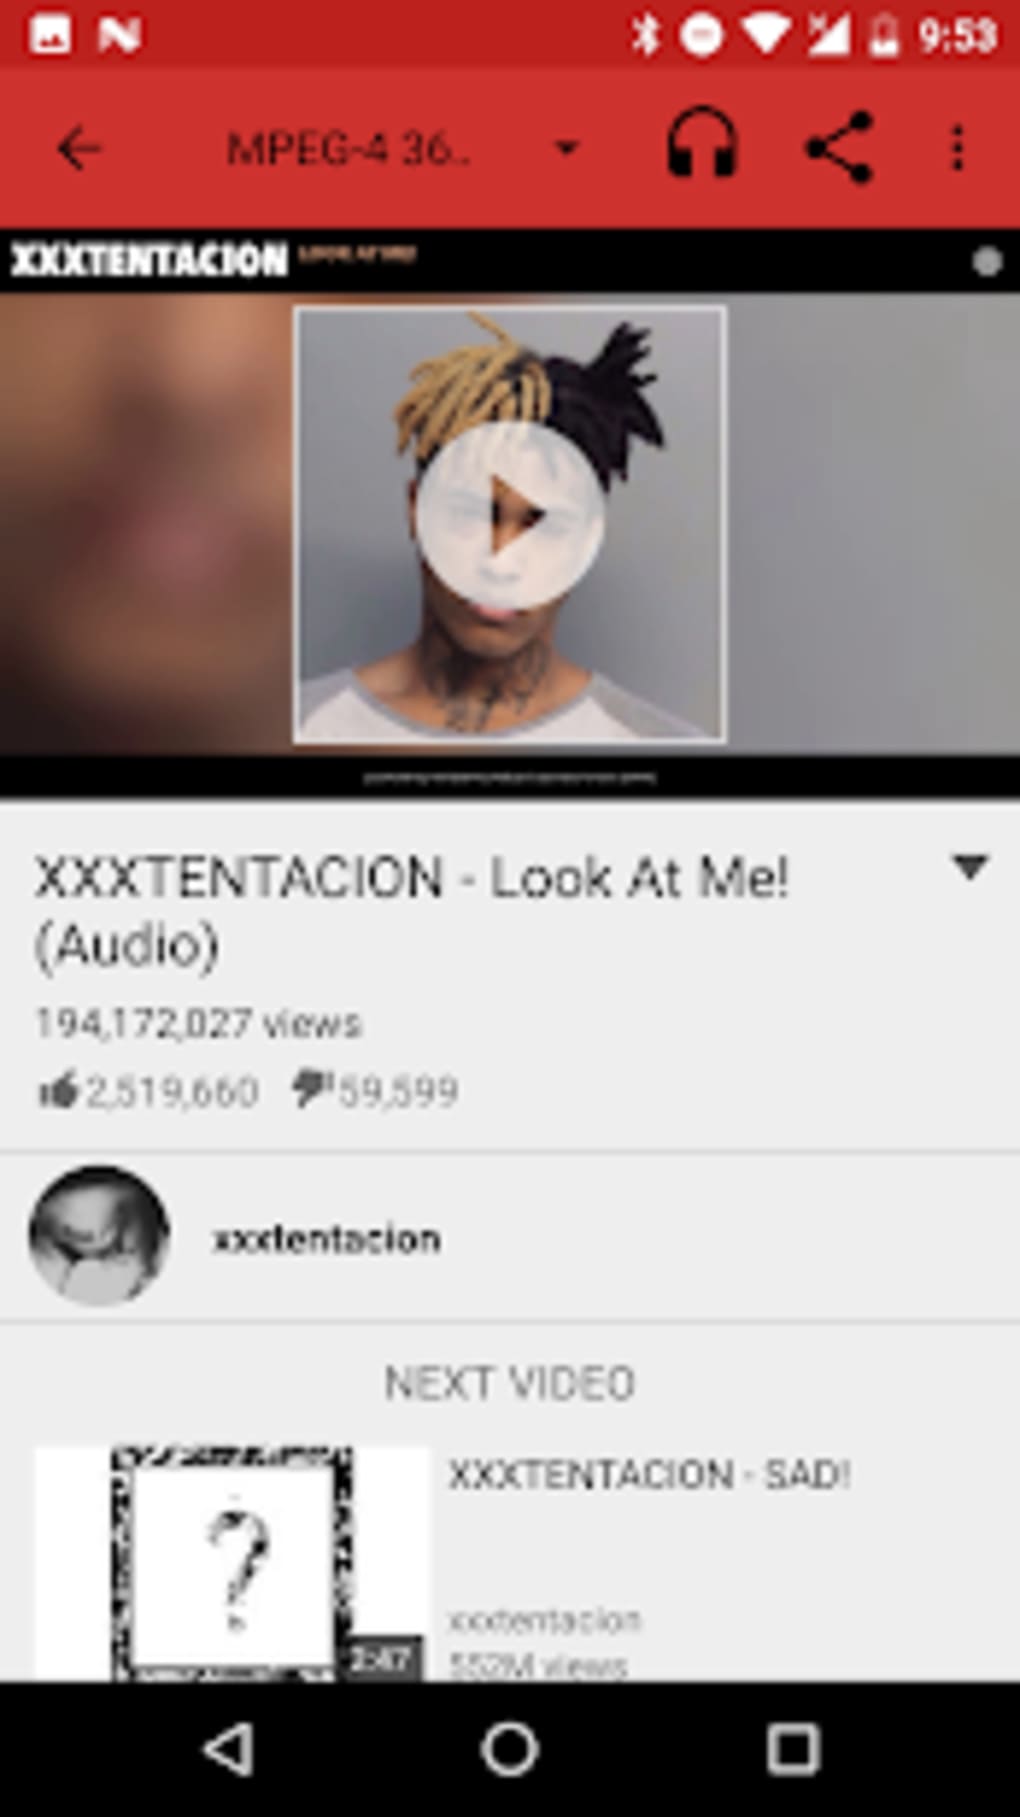 XXXTENTACION - Look At Me! (Audio) 